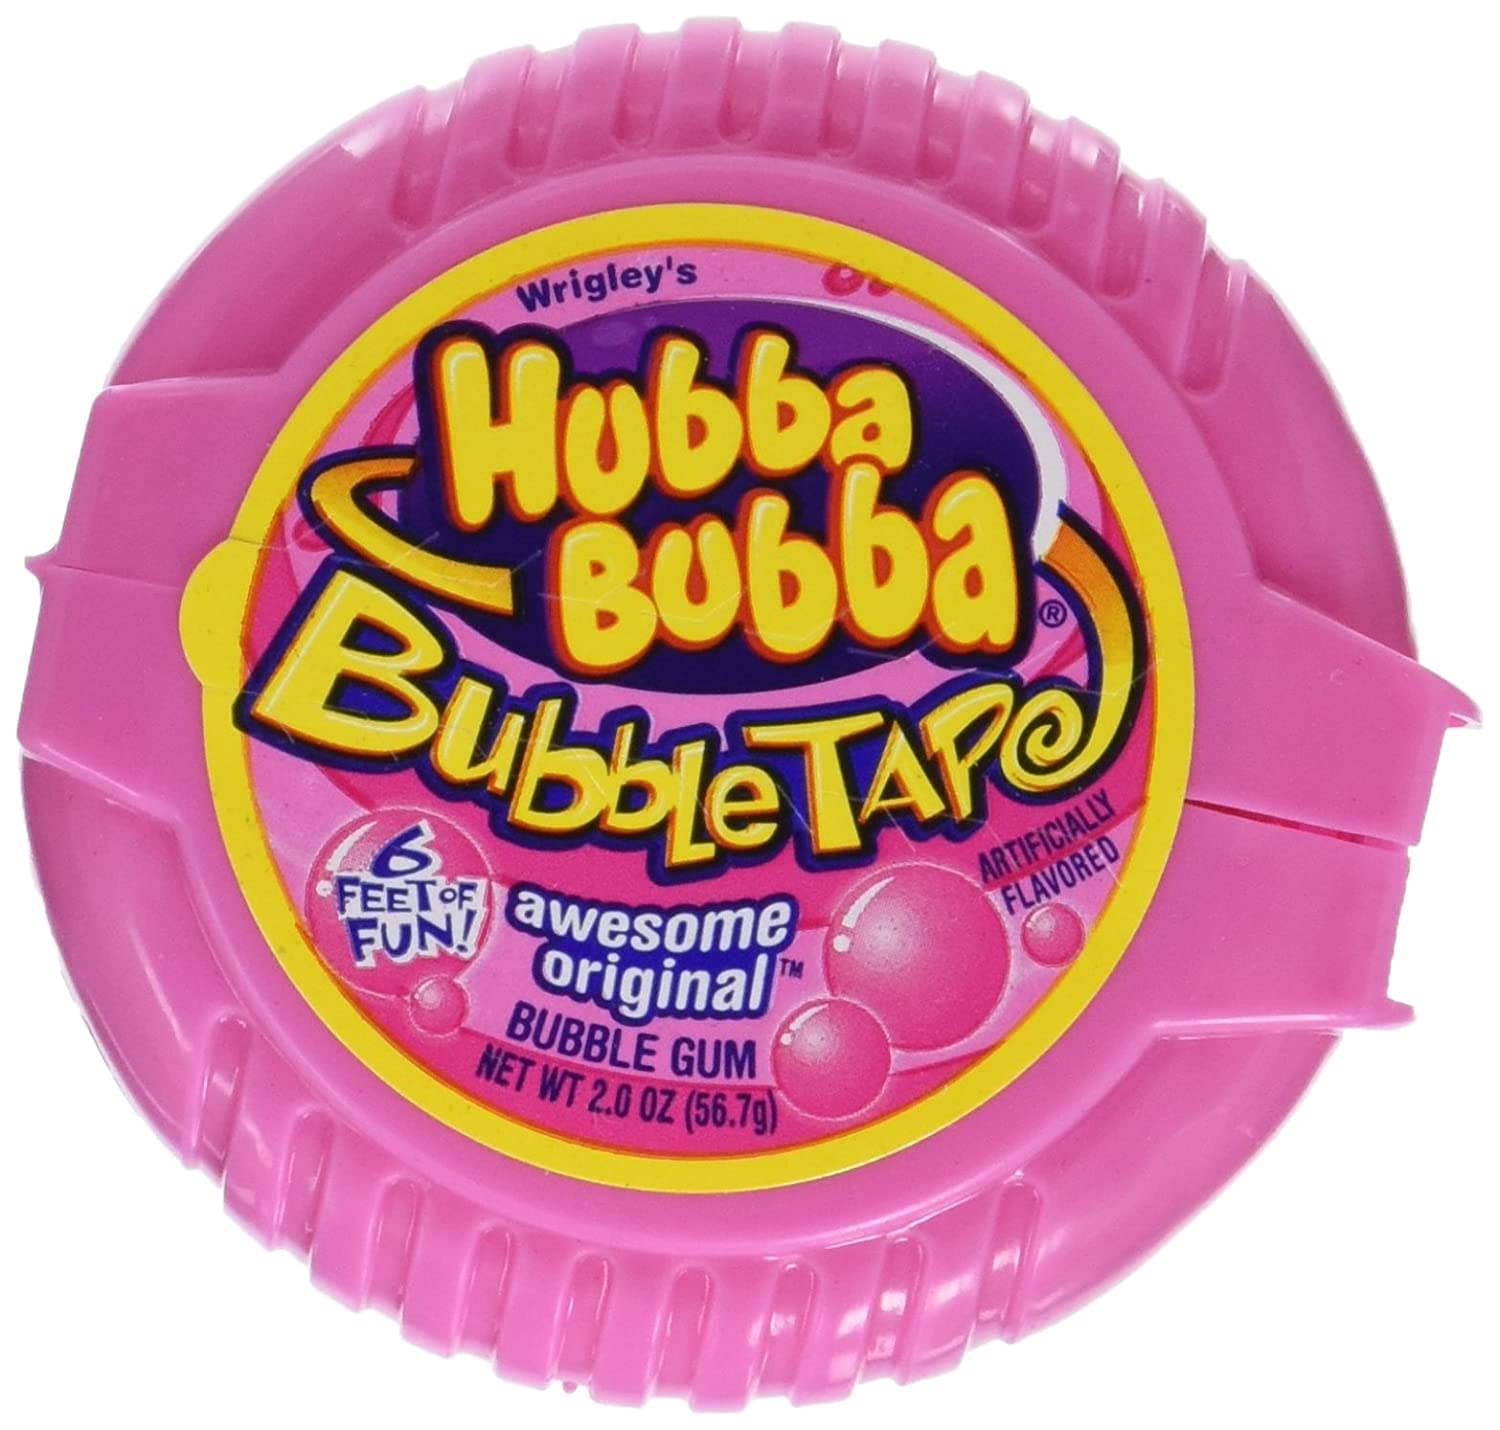 6-Pack 2oz Hubba Bubba Gum Awesome Original Bubble Gum Tape $1.05 w/ S&S